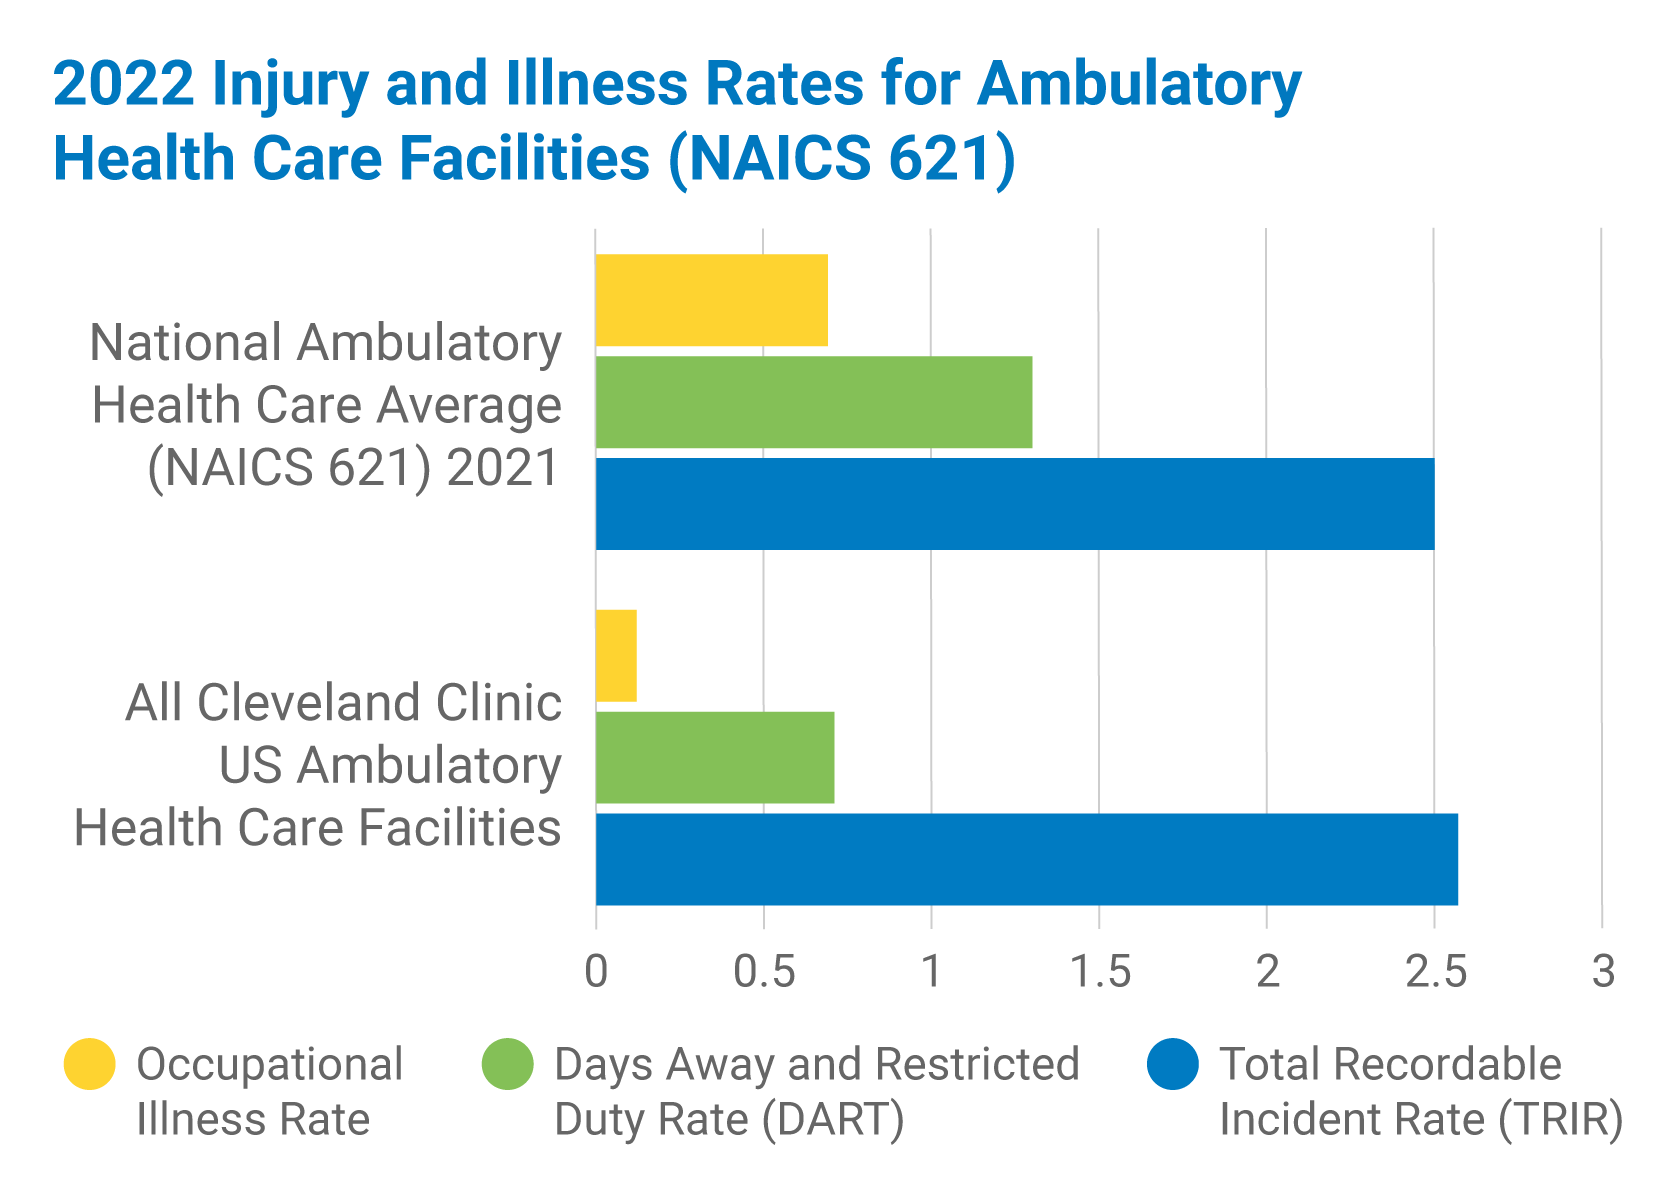 2022 injury and illness rates for ambulatory health care facilities (NAICS 621)